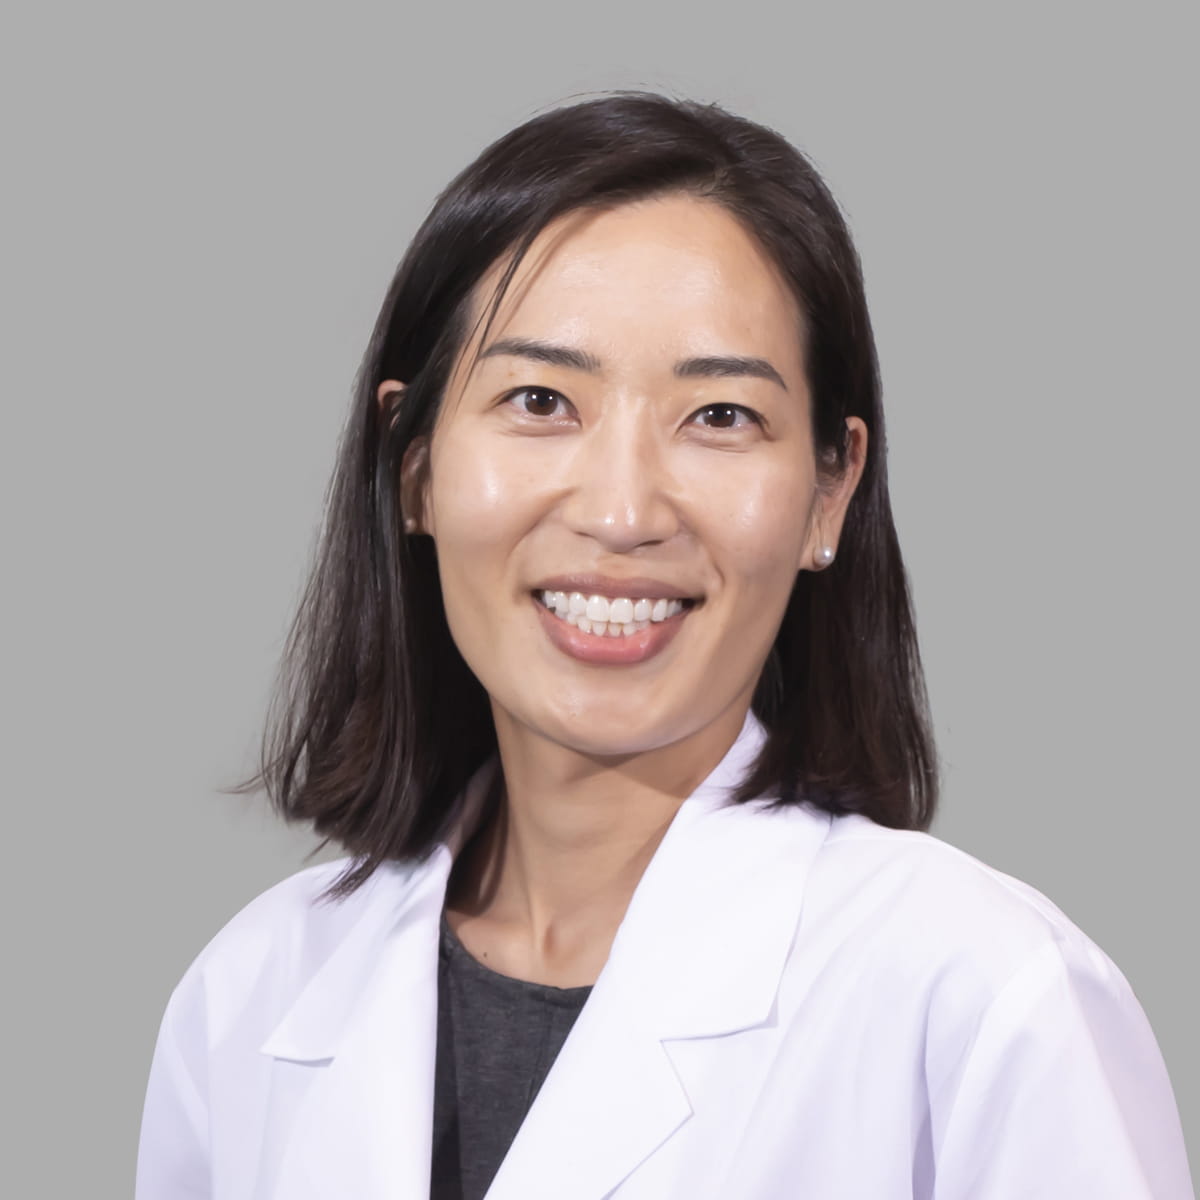 A friendly image of Susan Kim, MD